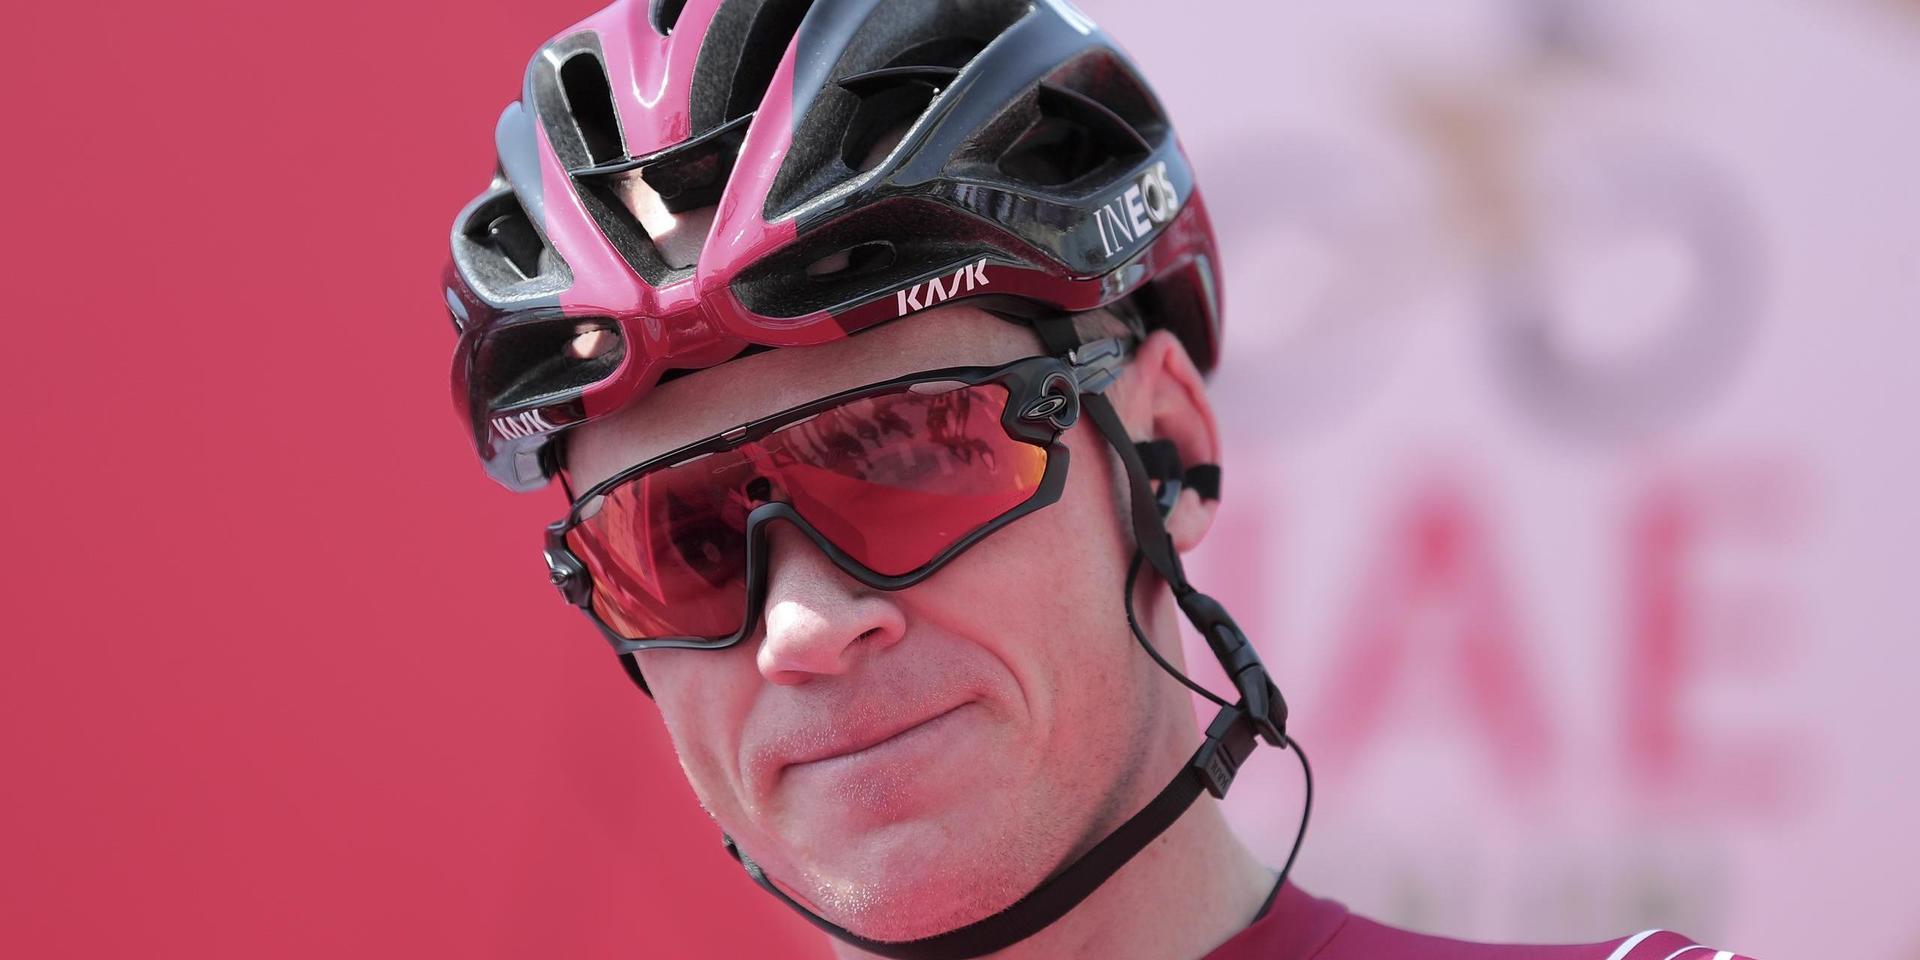 Engelsmannen Chris Froome petas från Tour de France. Arkivbild.